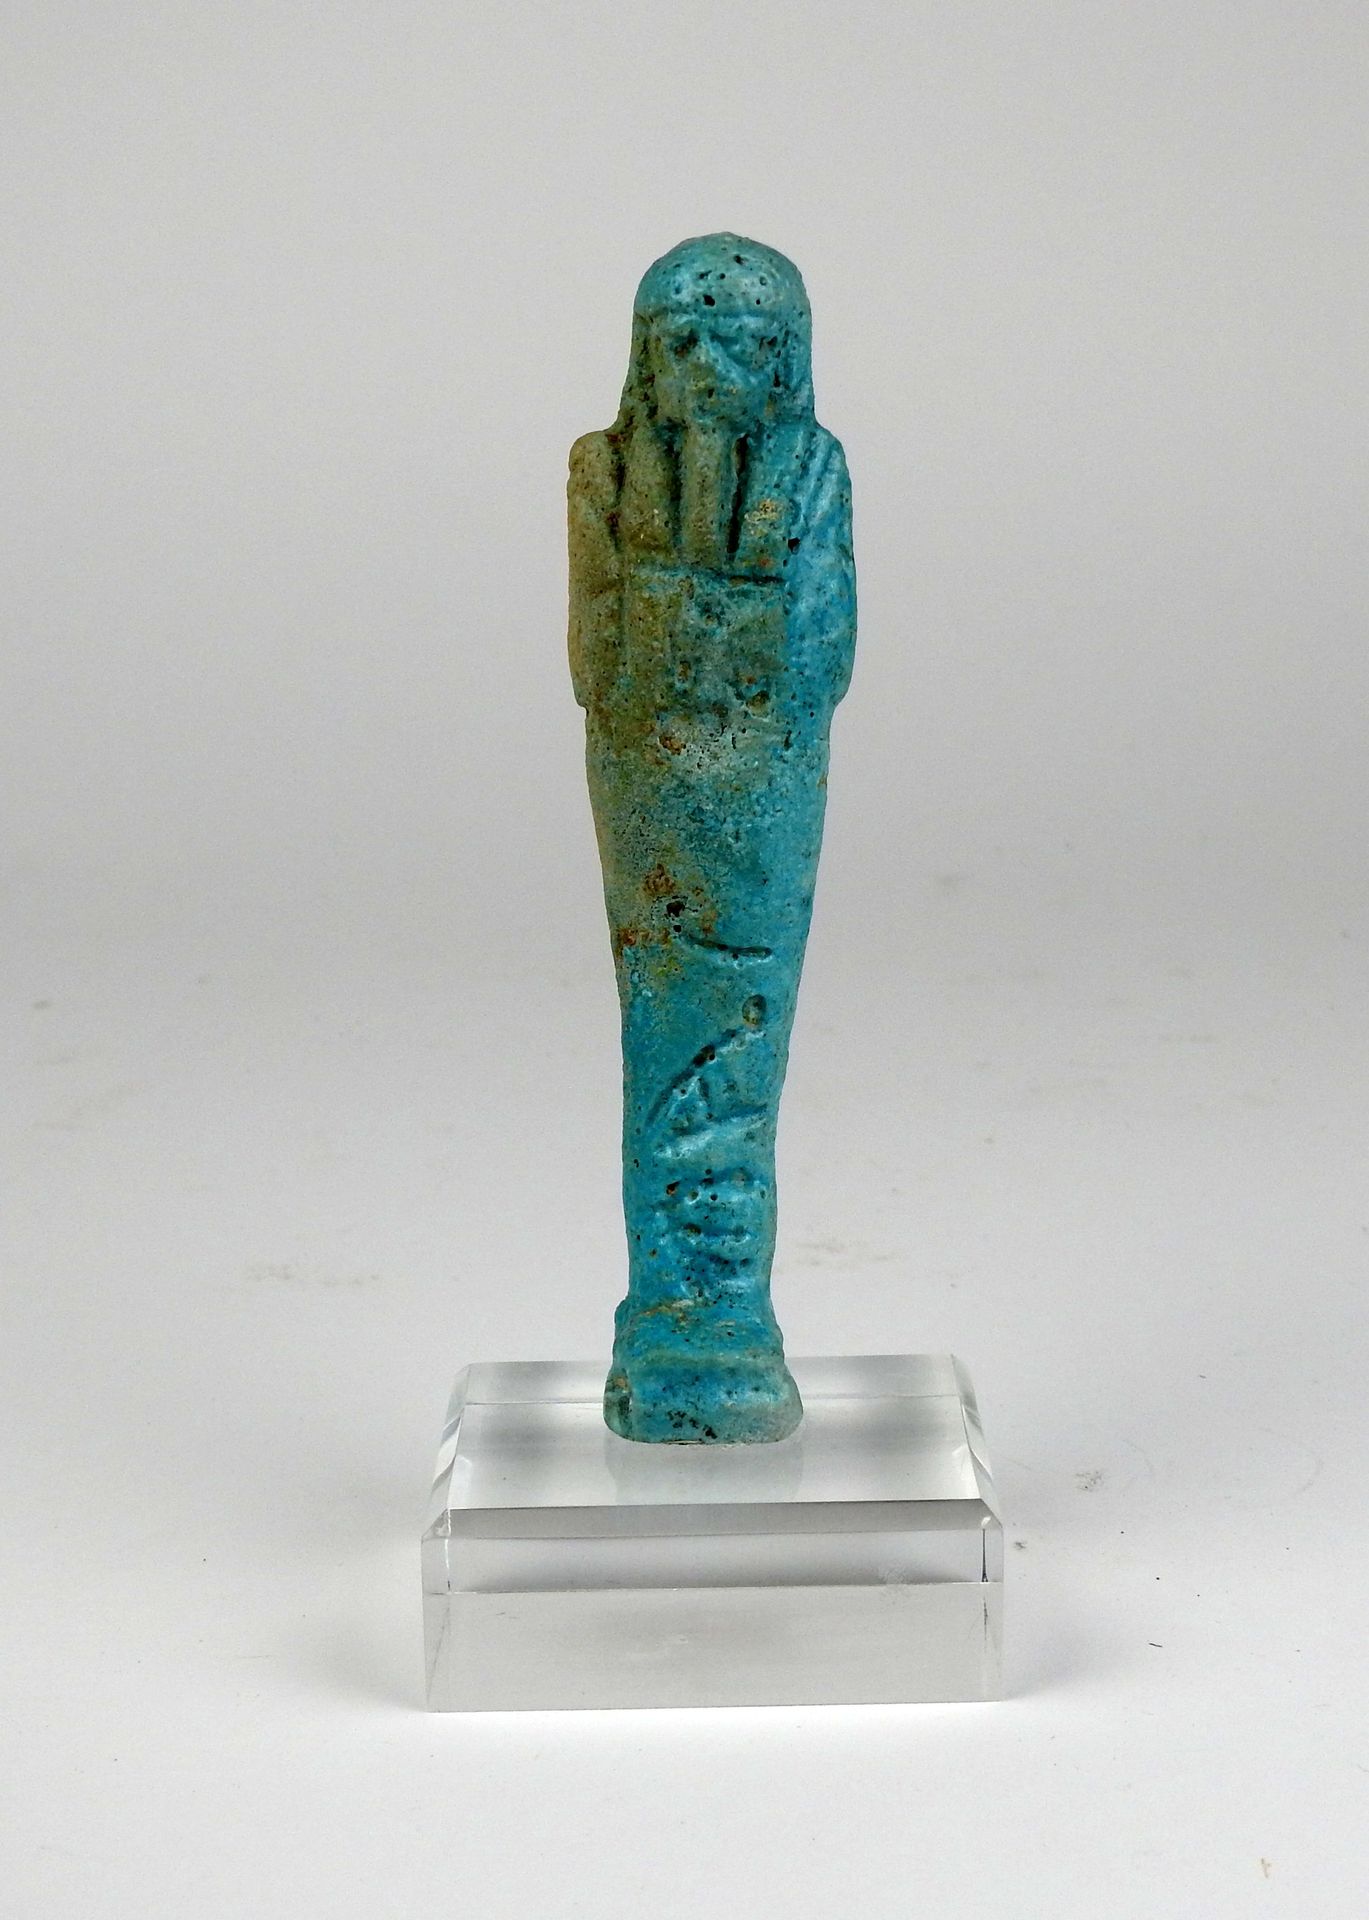 Null 搬运农具的奥谢布提

蓝色熔块11.4厘米

埃及第二十六至第三王朝晚期